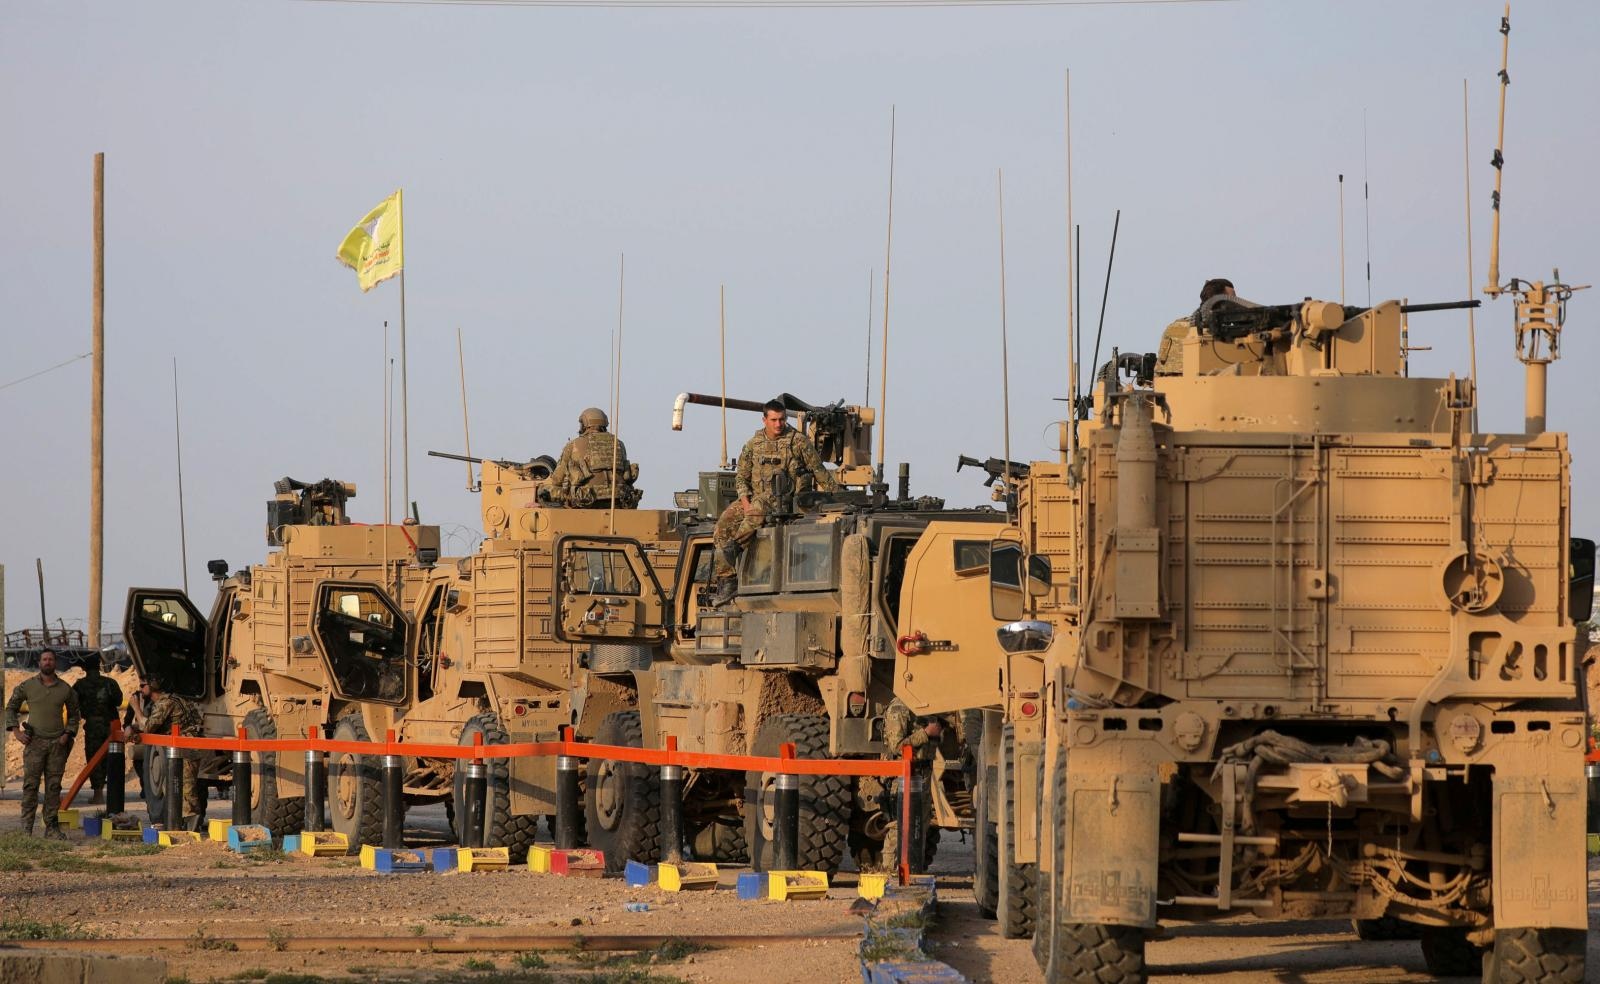 FILE PHOTO: American soldiers stand near military trucks, at al-Omar oil field in Deir Al Zor FILE PHOTO: American soldiers stand near military trucks, at al-Omar oil field in Deir Al Zor, Syria March 23, 2019. REUTERS/Rodi Said/File Photo Rodi Said